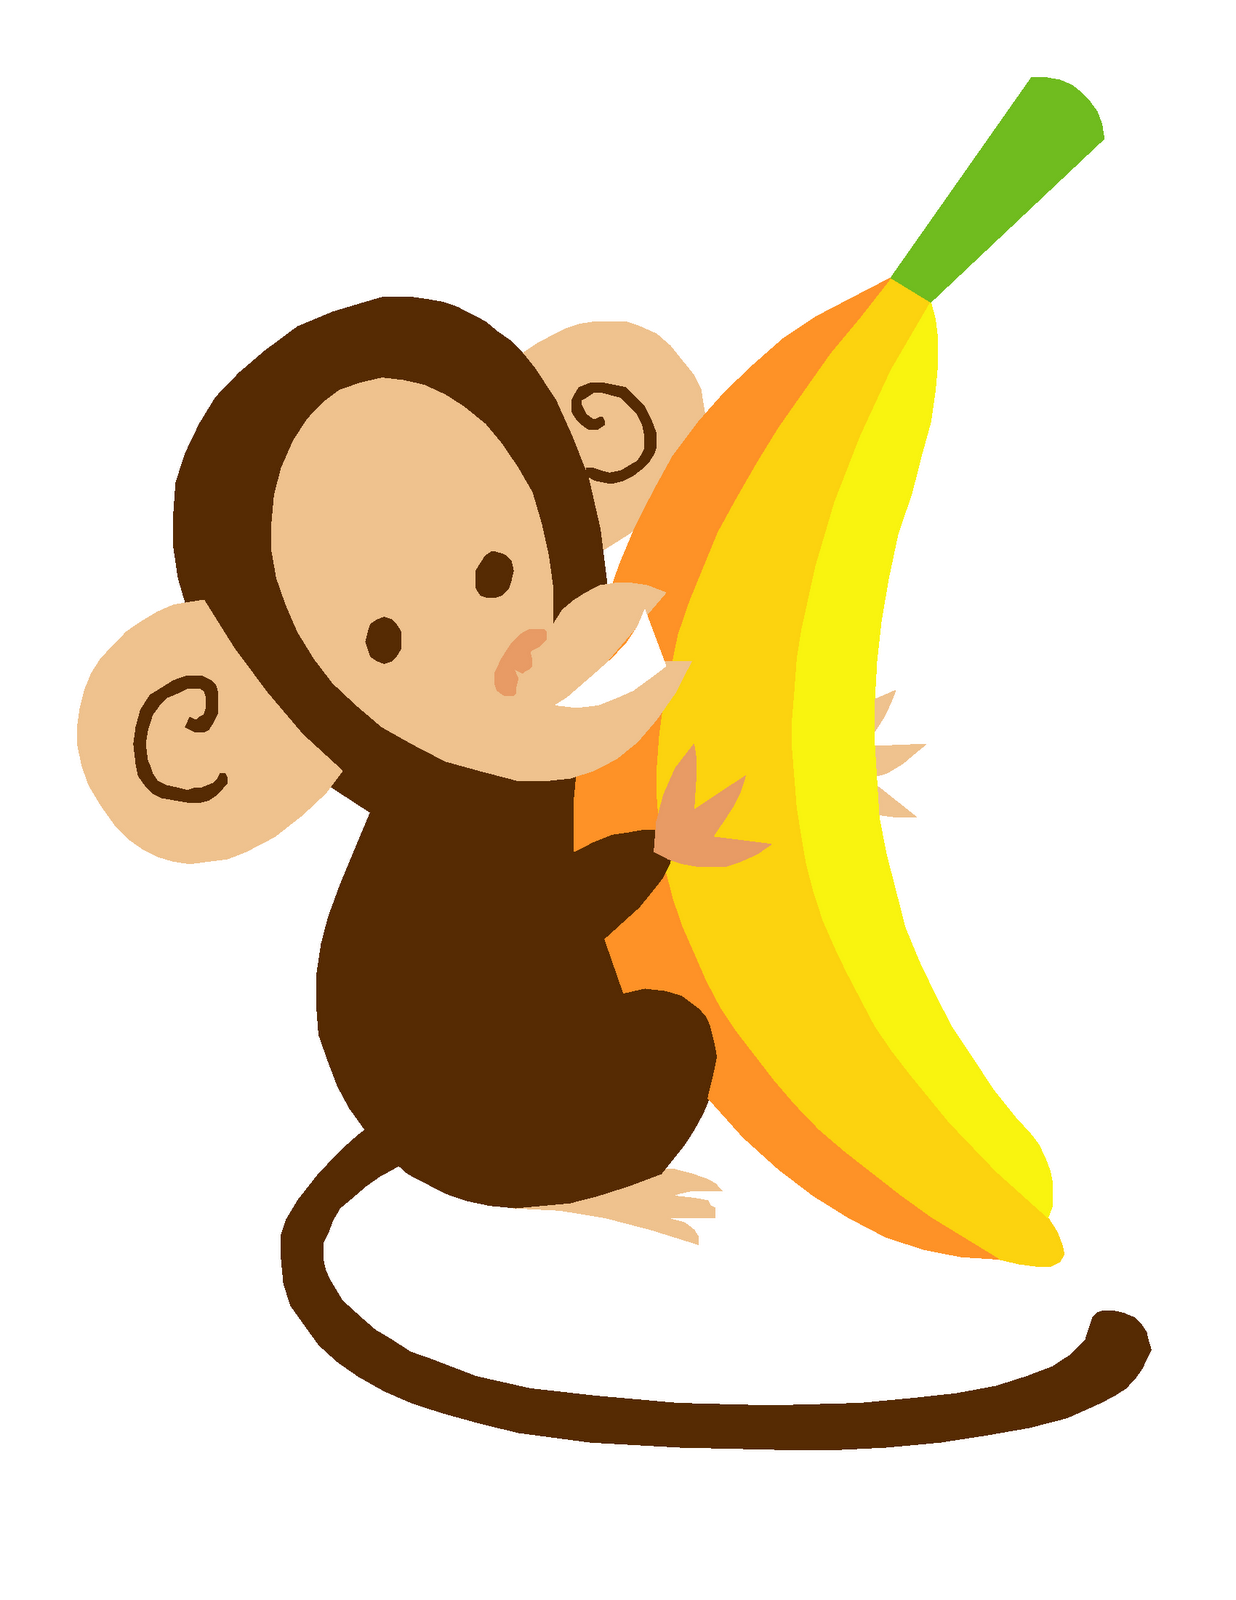 Обезьяна подавилася бананом. Обезьяна с бананом. Obezyano s bansnom. Бибизьяна с бонаном. Обезьяна ест банан.